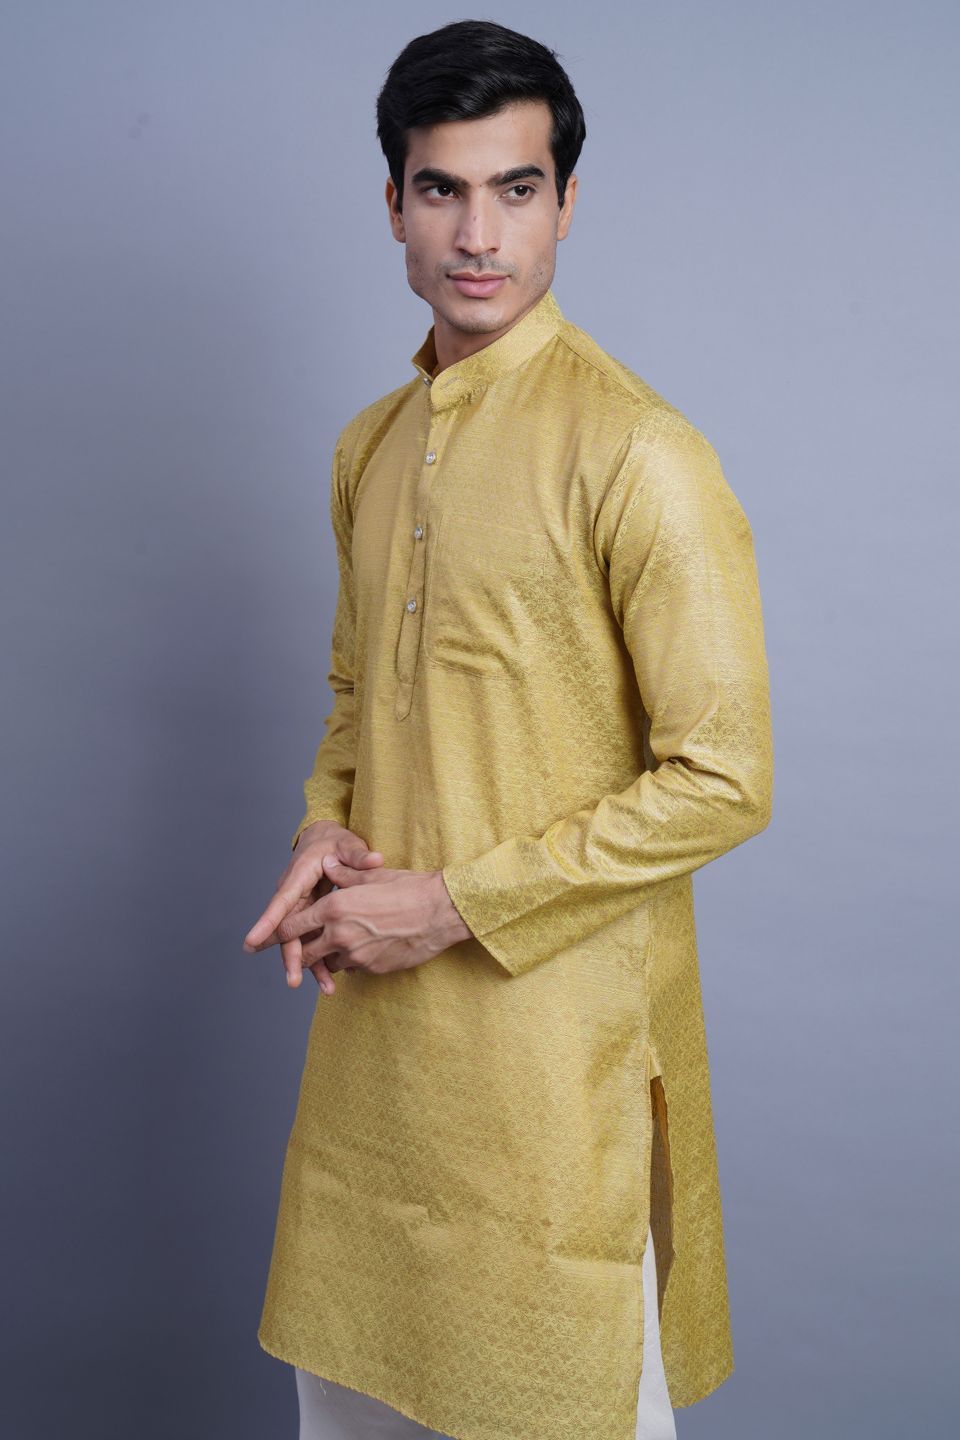 Wintage Men's Banarasi Art Silk Cotton Blend Festive and Casual Long Indian Kurta Comfy Sleepset Top : Green